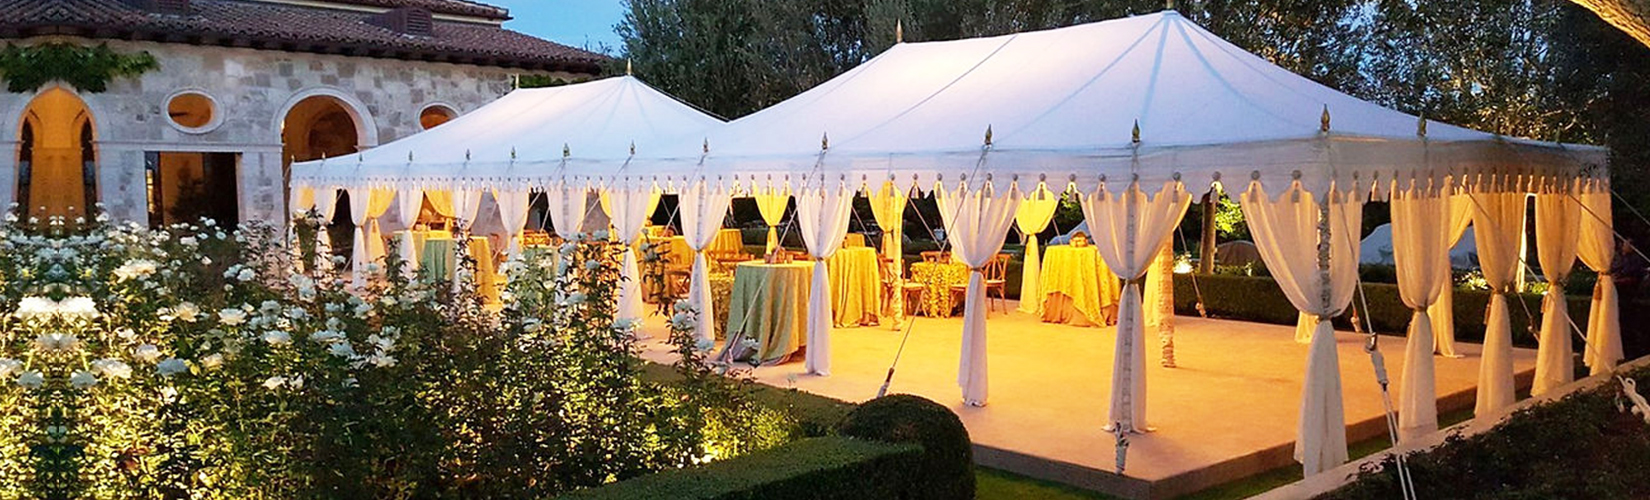 Wedding Tents